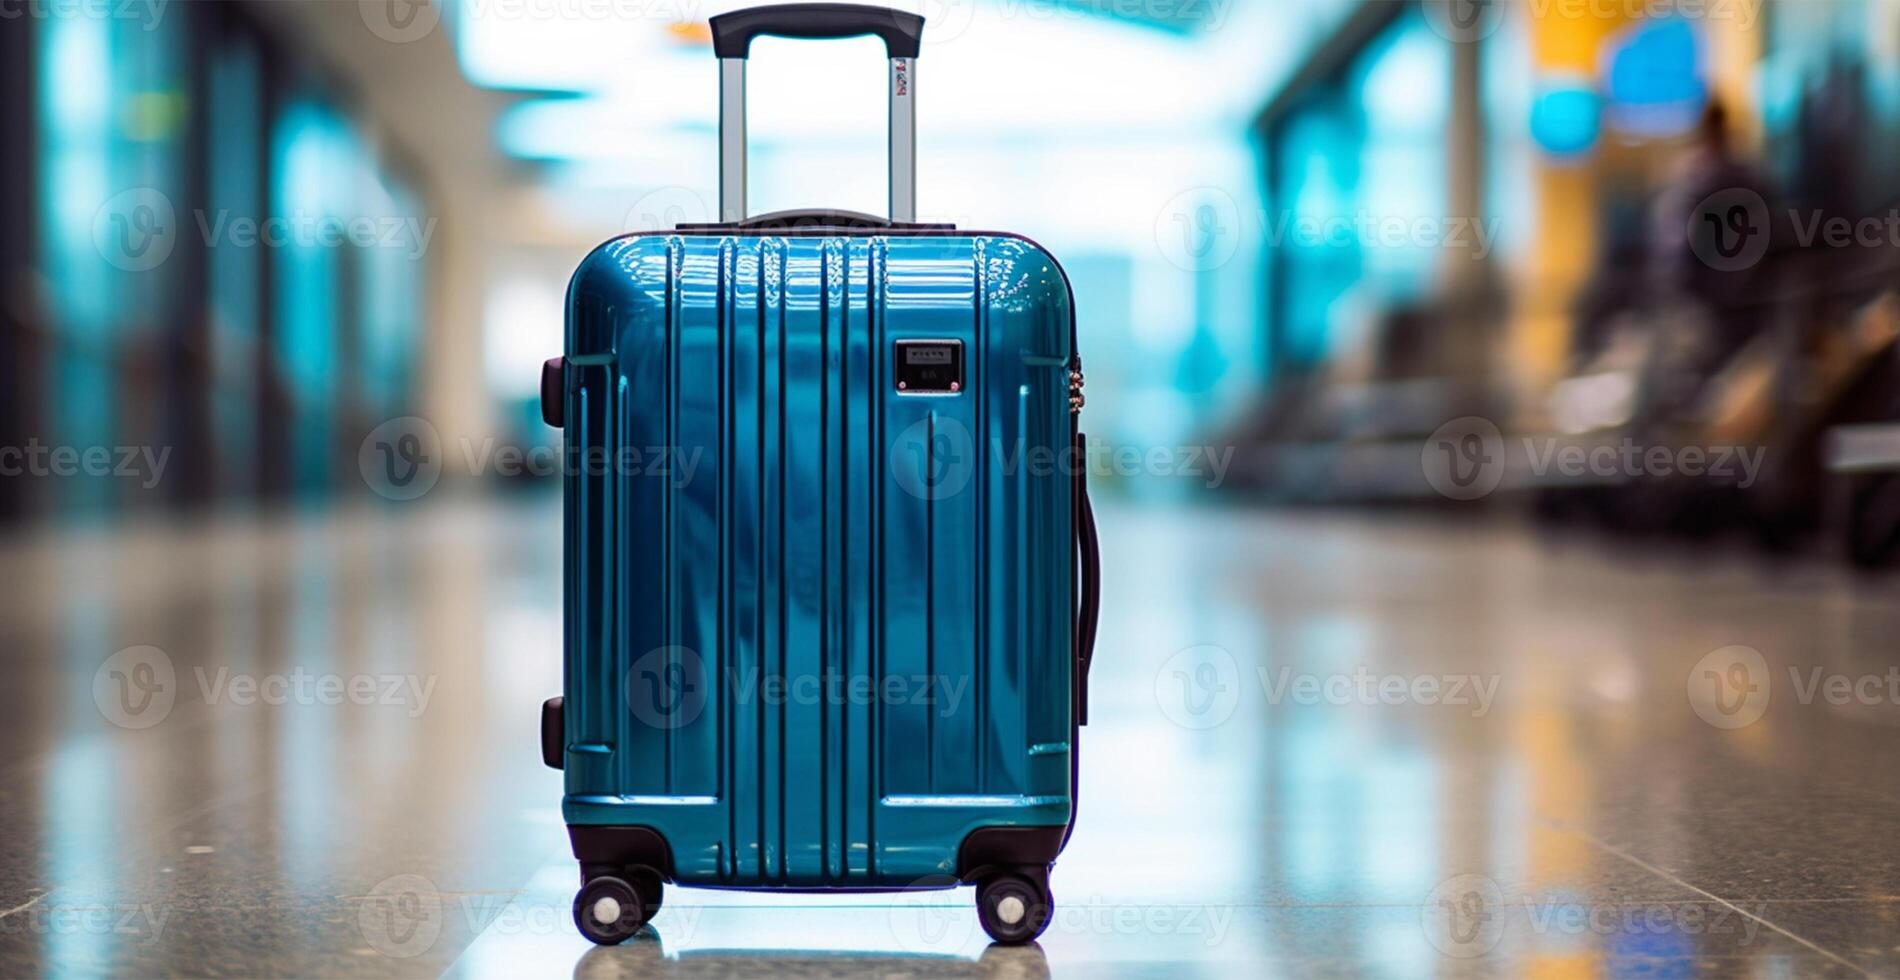 Blue suitcase, airport luggage - image photo